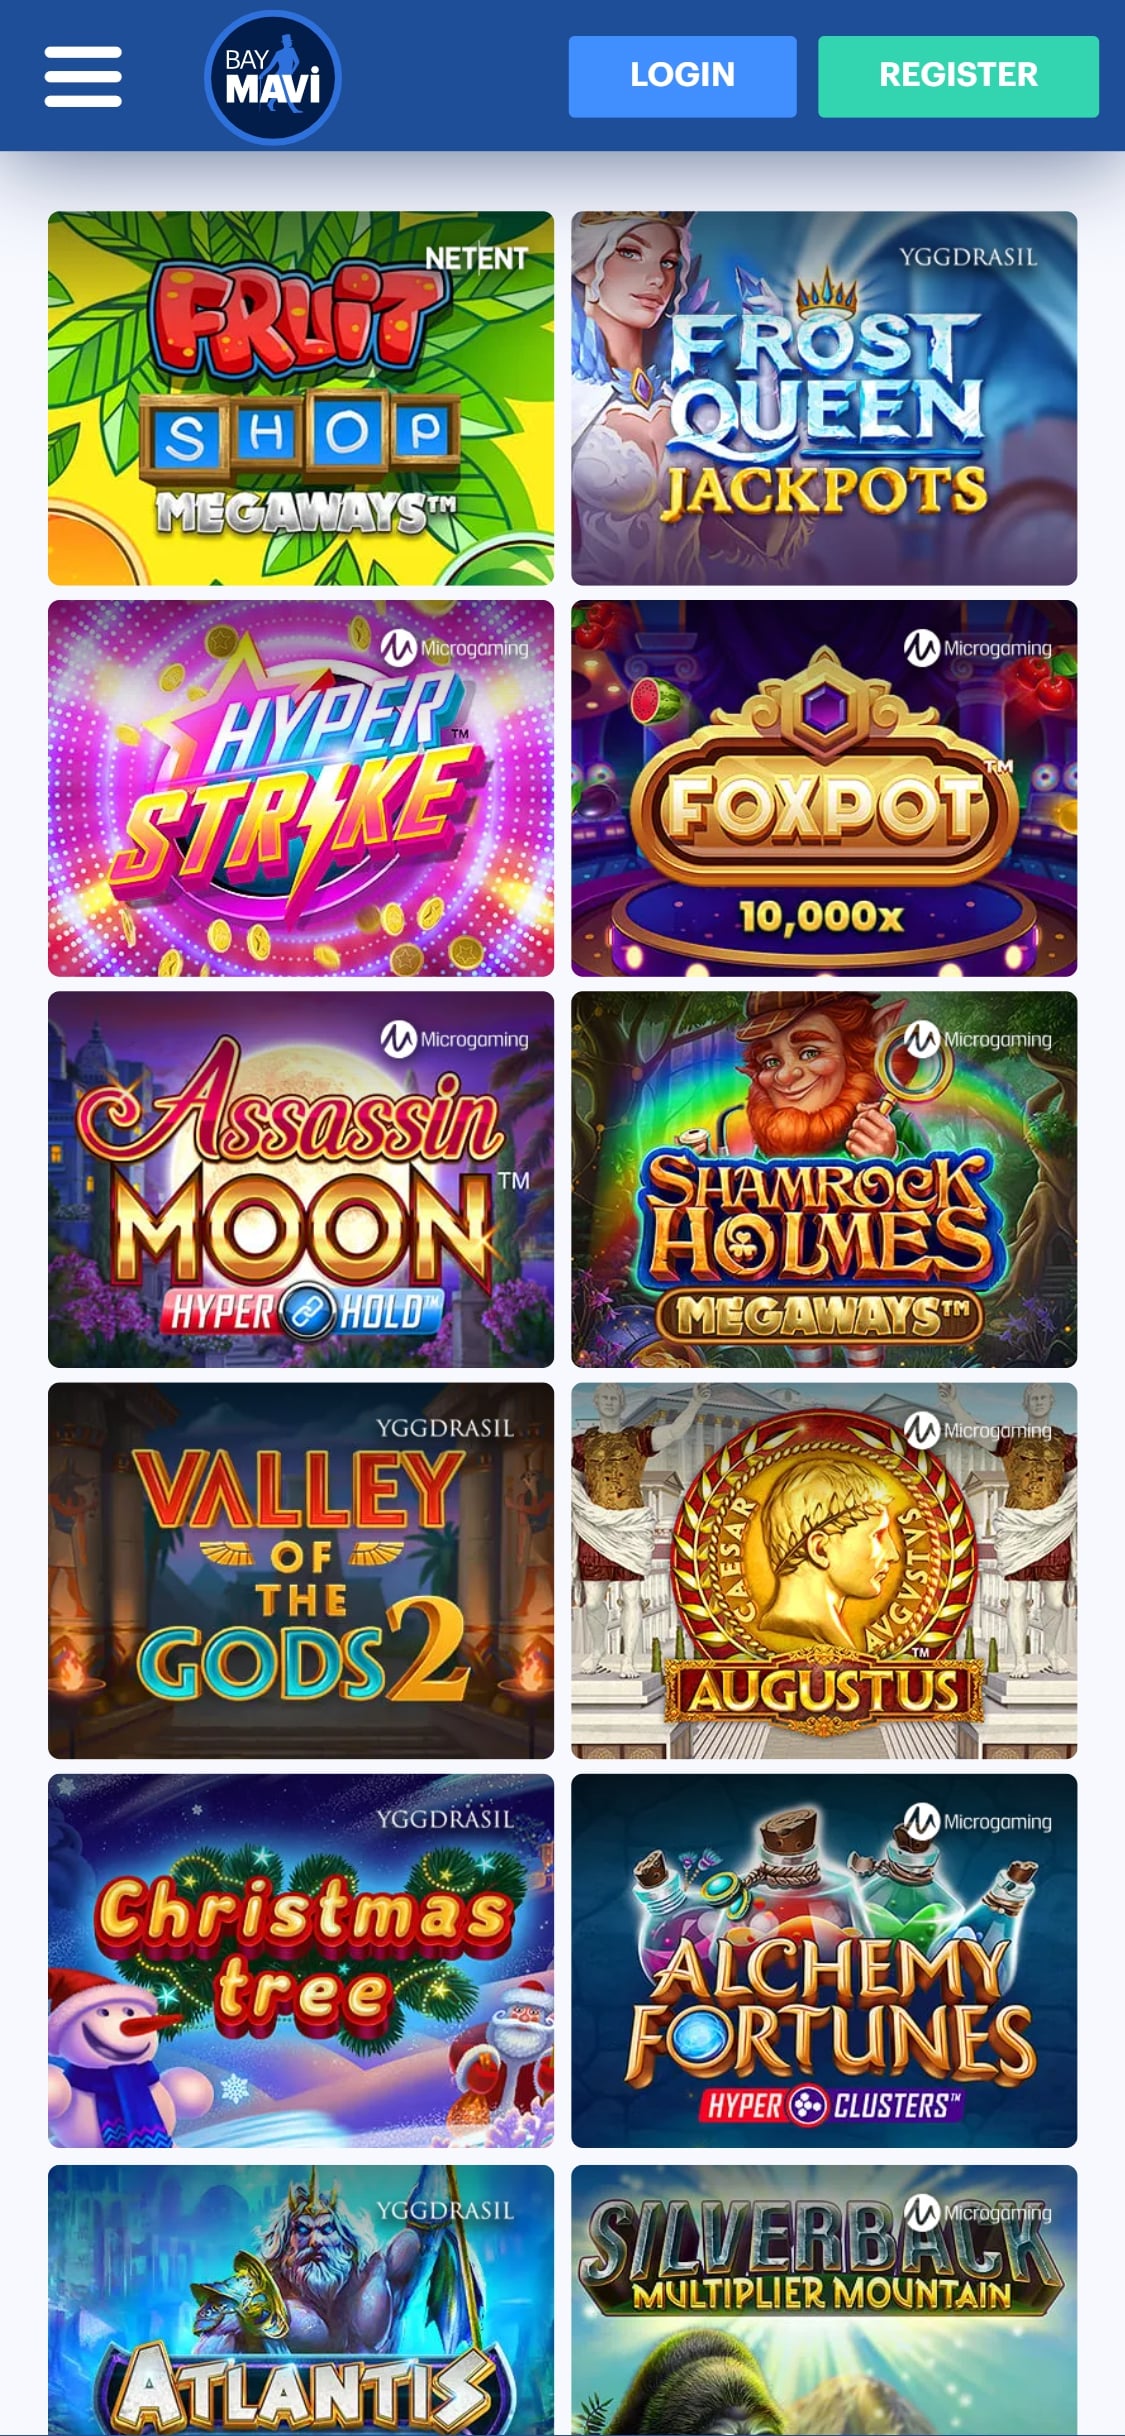 BayMavi Casino Mobile Games Review